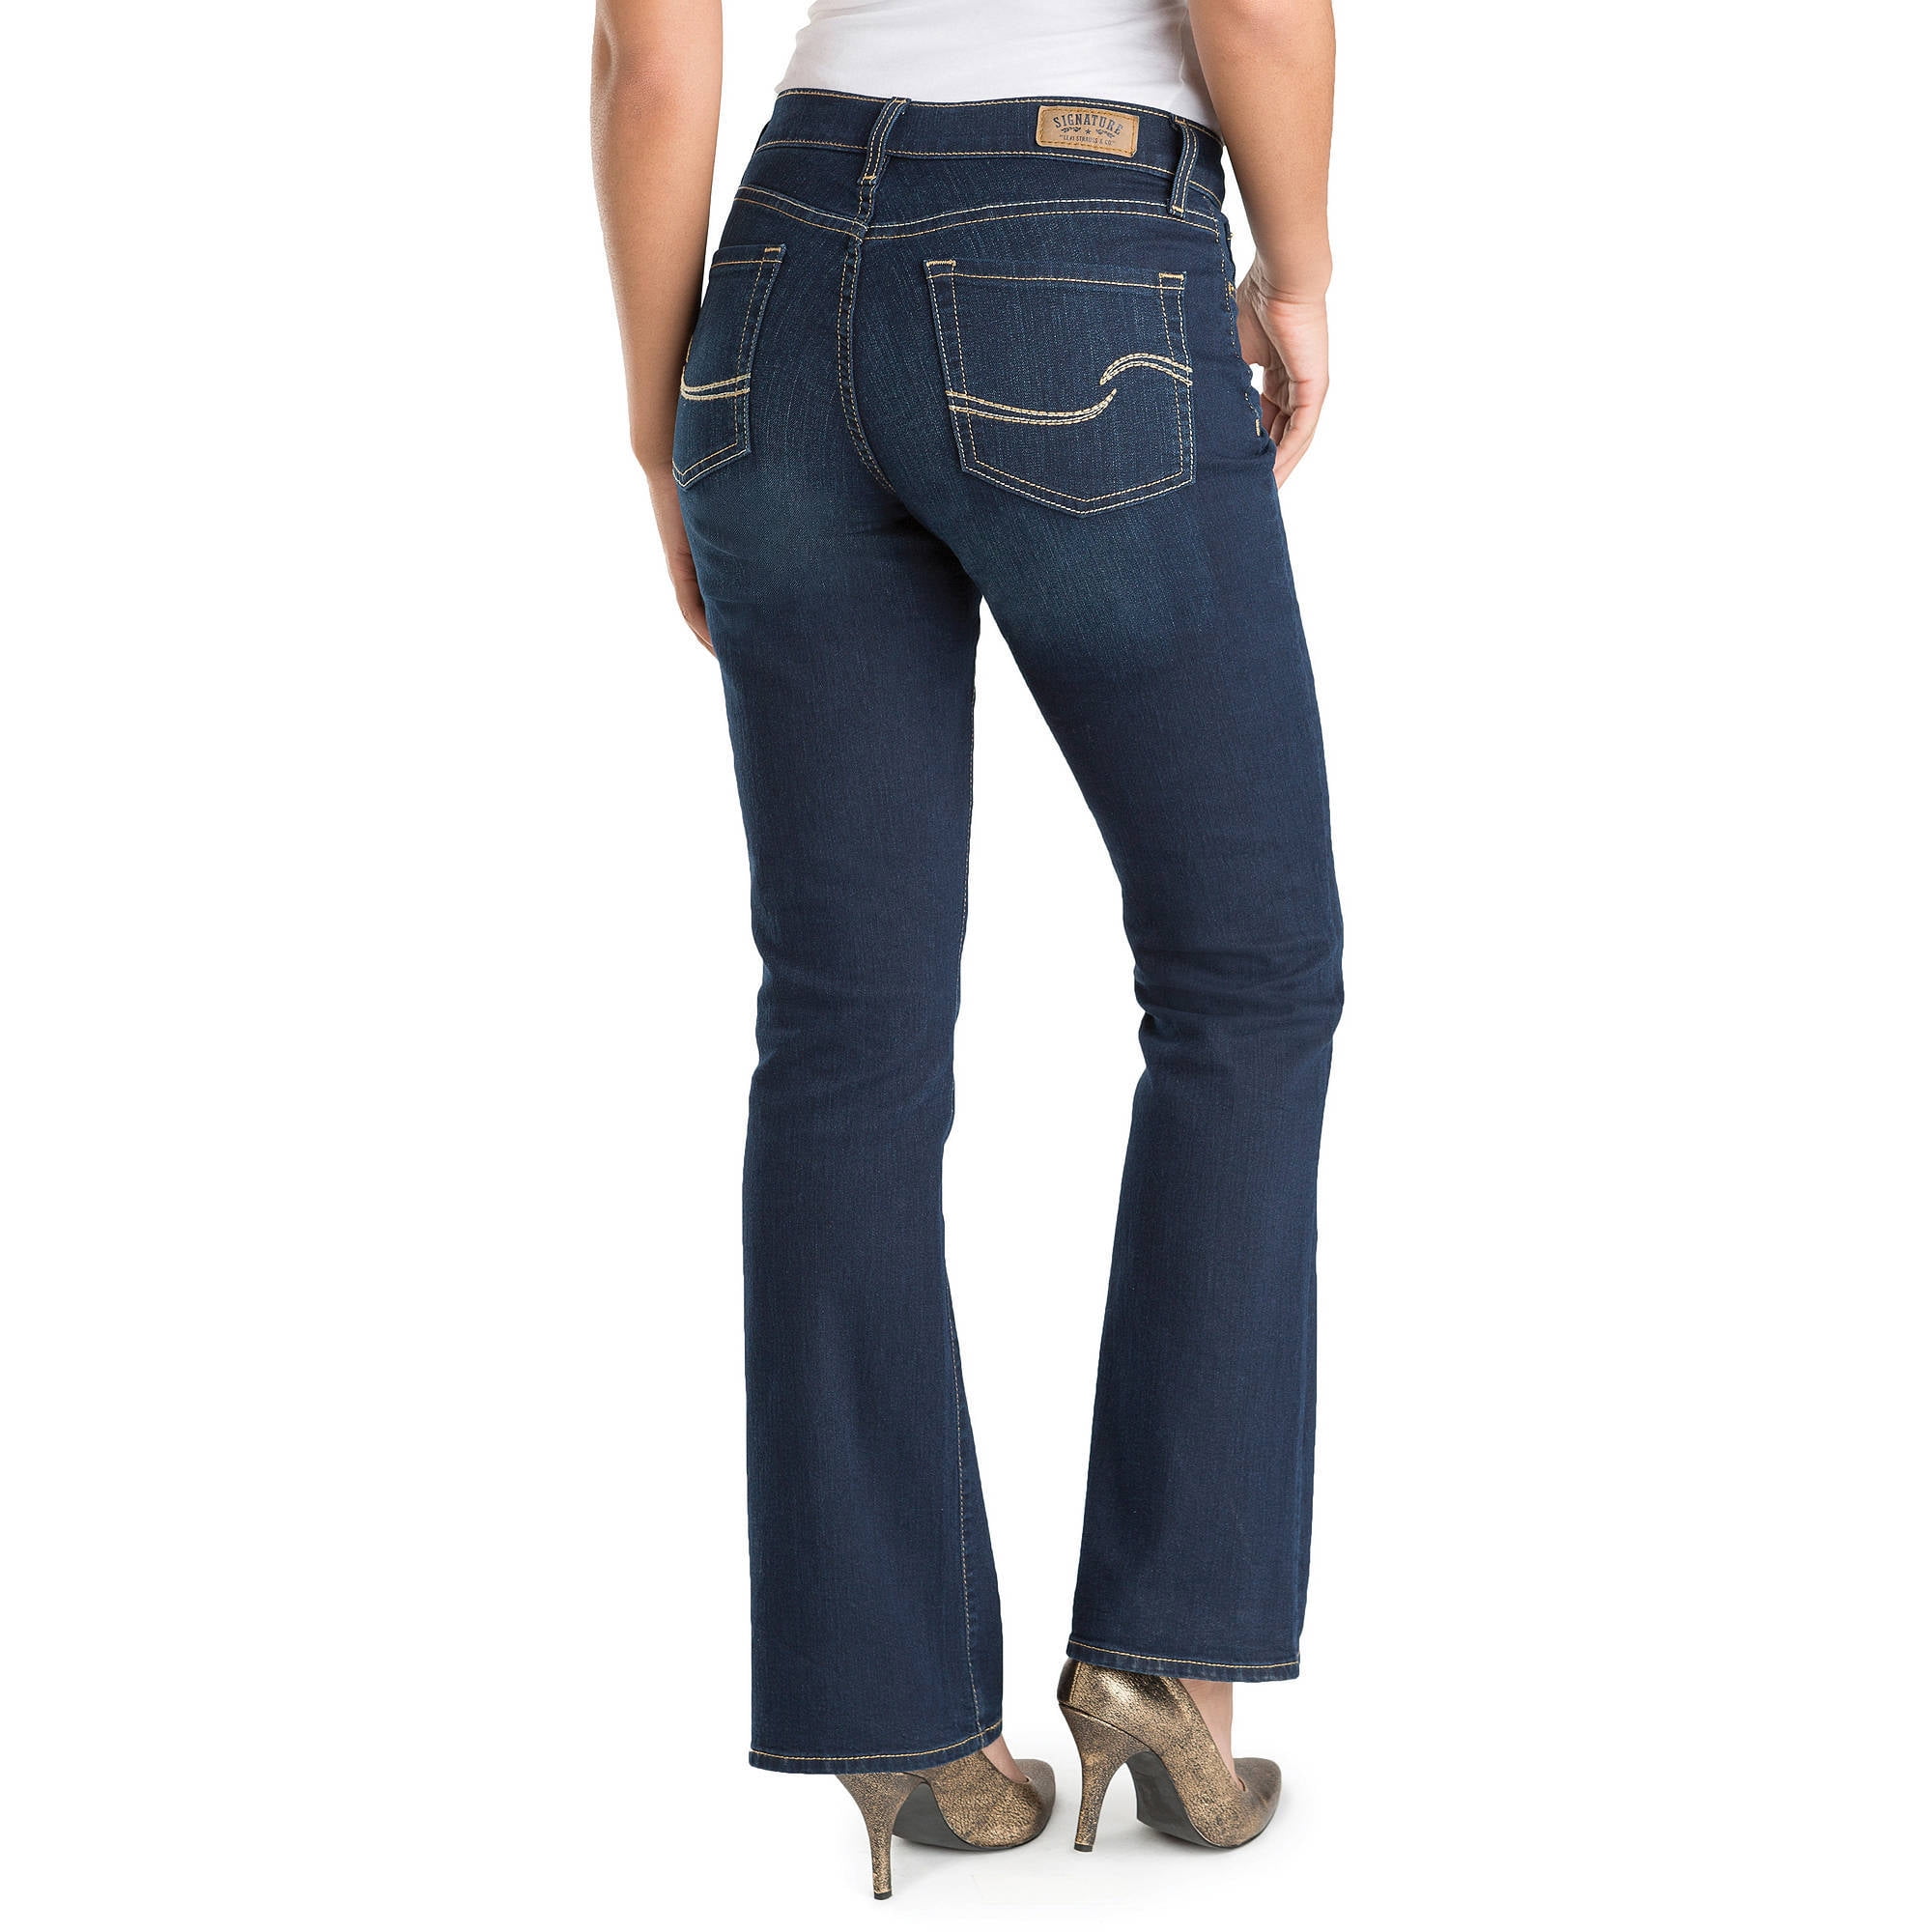 levi's 529 curvy jeans